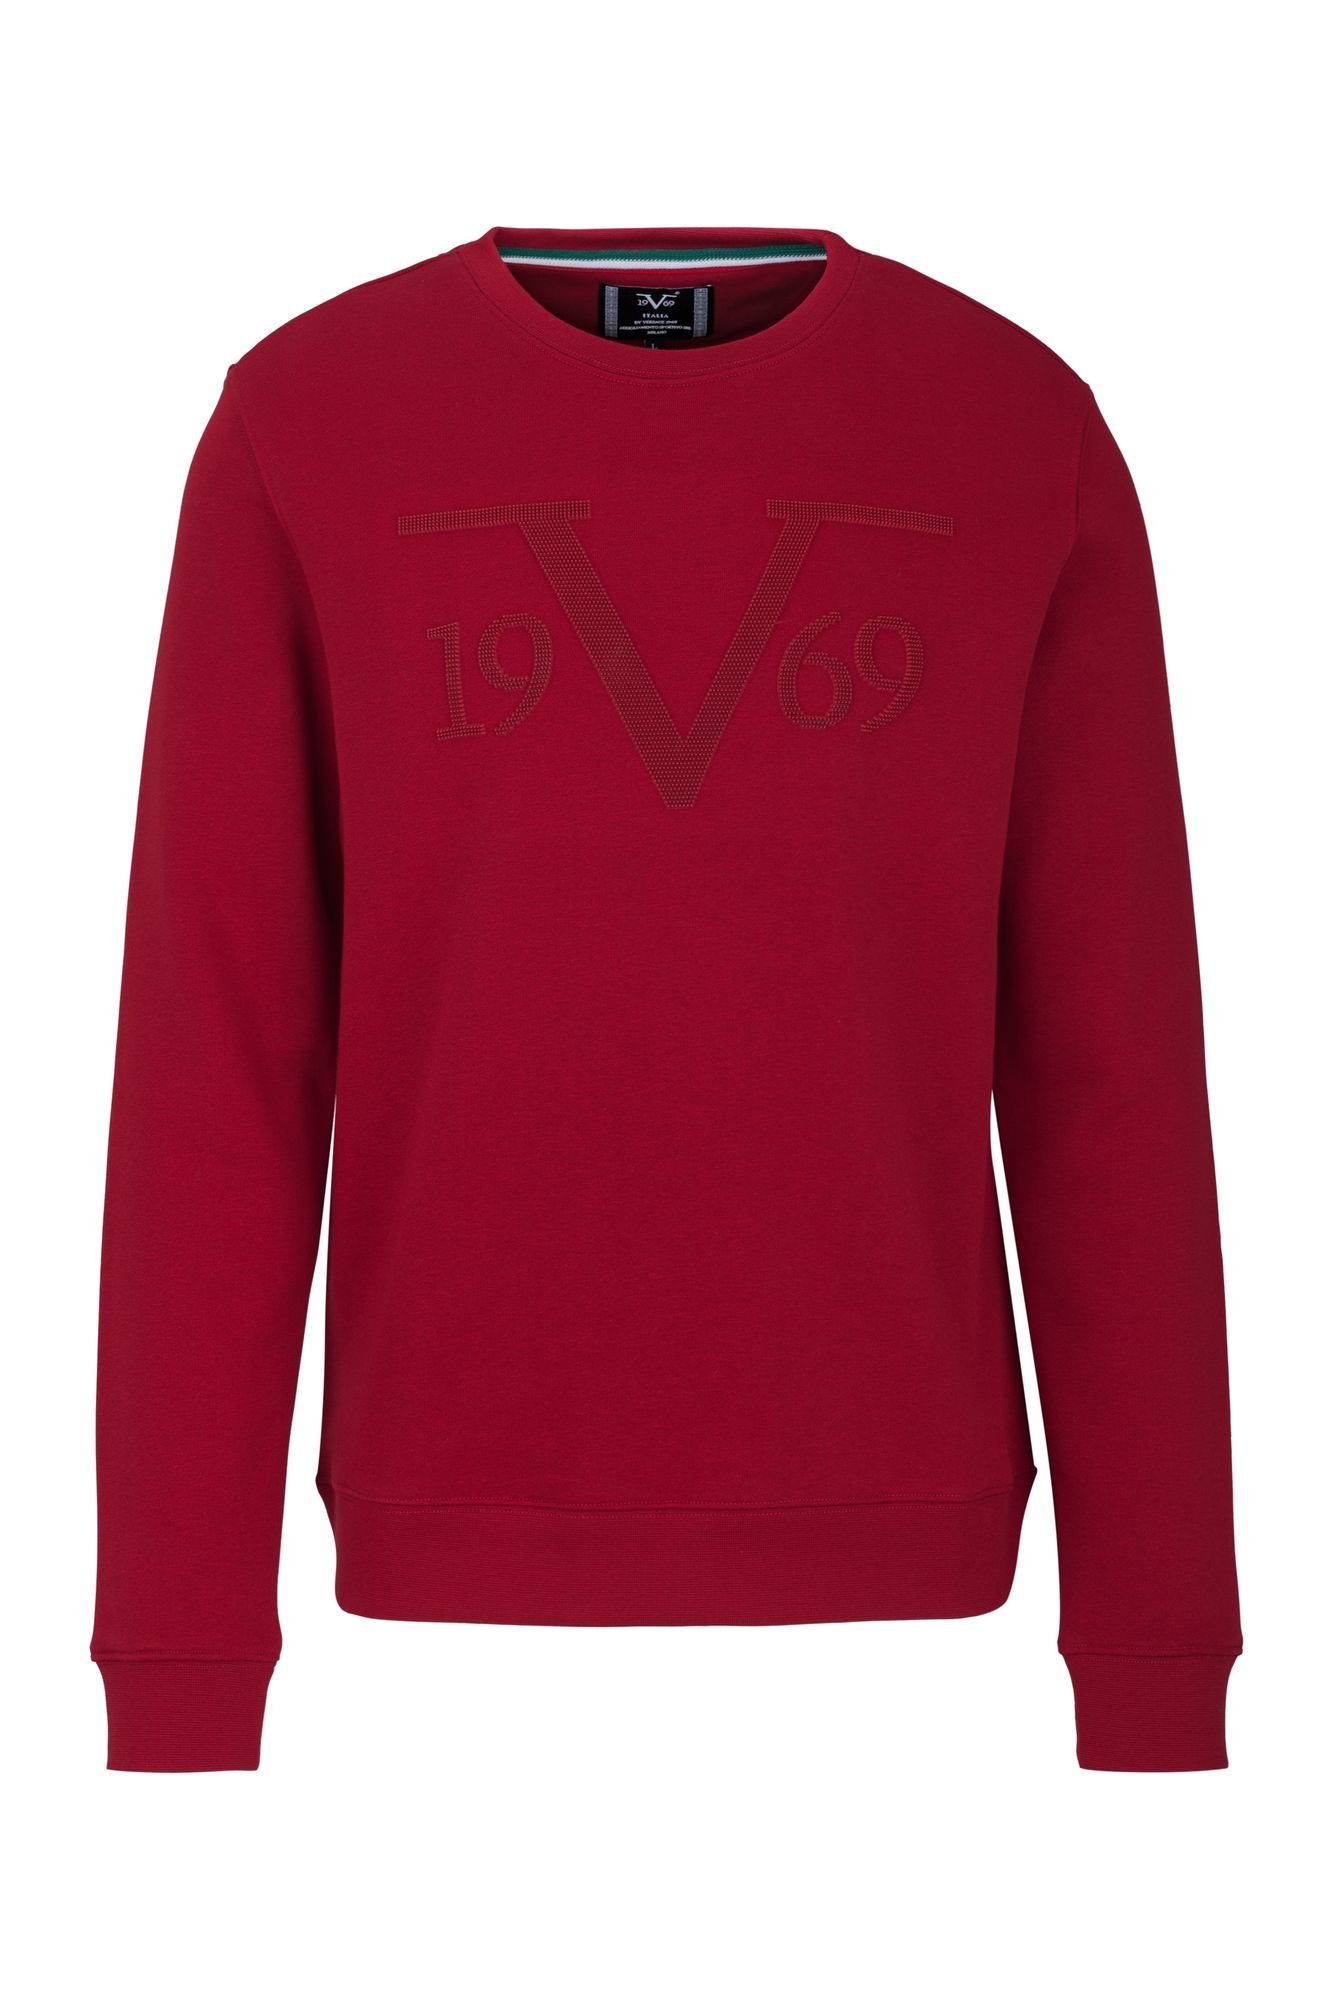 19V69 Italia by Versace Sweatshirt by Versace Sportivo SRL - Giorgio | Sweatshirts